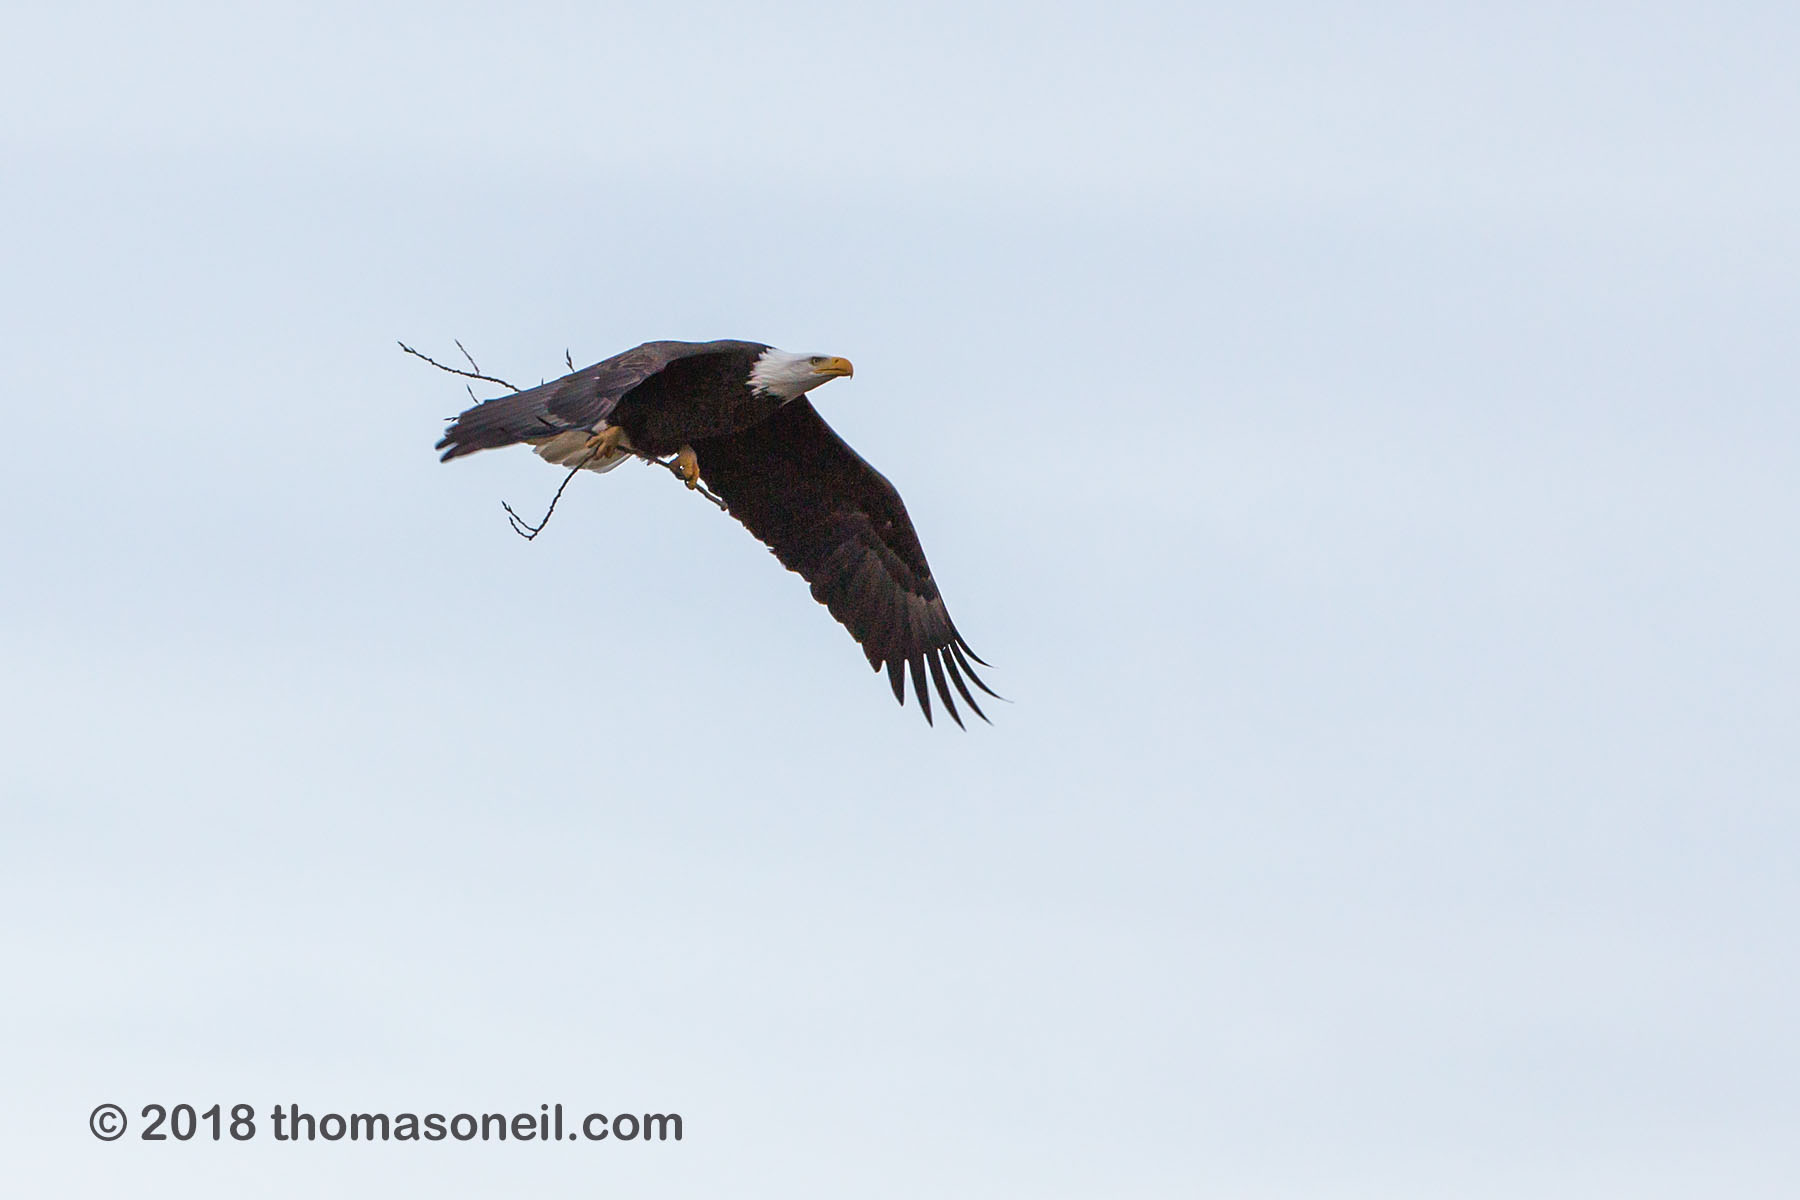 Bald eagle gathering nesting material, Loess Bluffs National Wildlife Refuge, Missouri, December 2018.  Click for next photo.